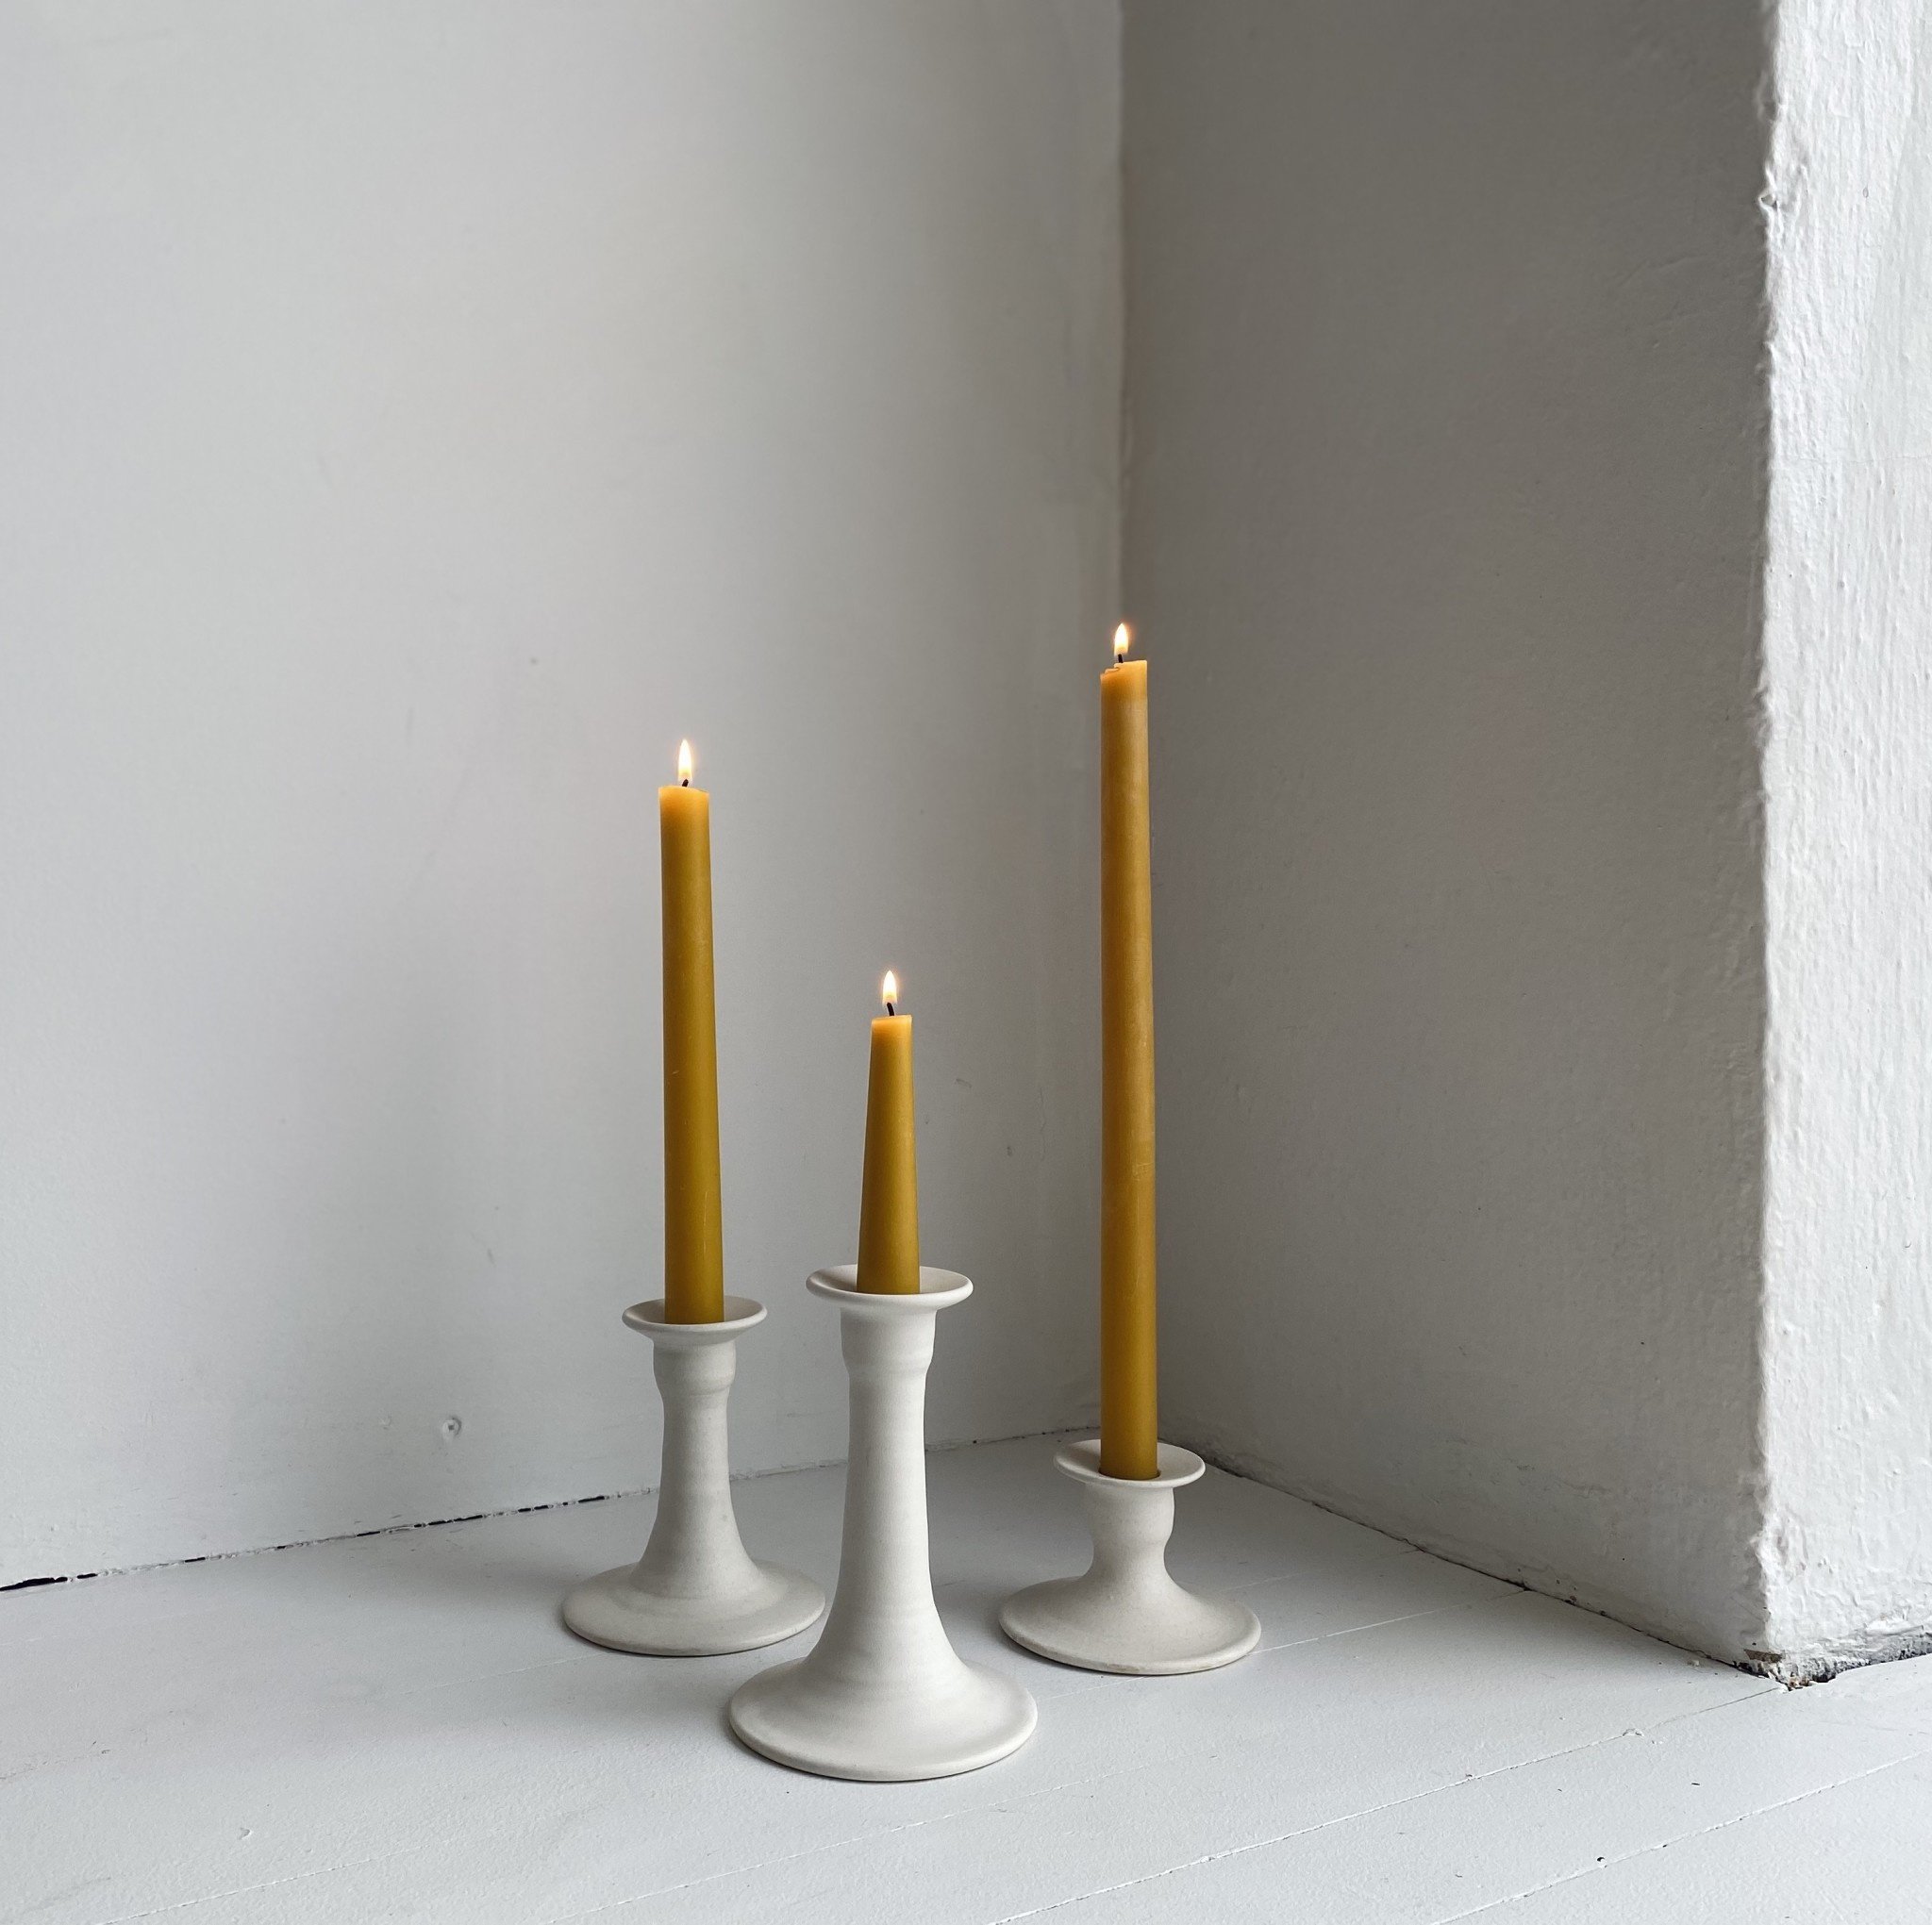 https://cdn.shoplightspeed.com/shops/625731/files/29722053/the-foundry-home-goods-foundry-classic-taper-candl.jpg